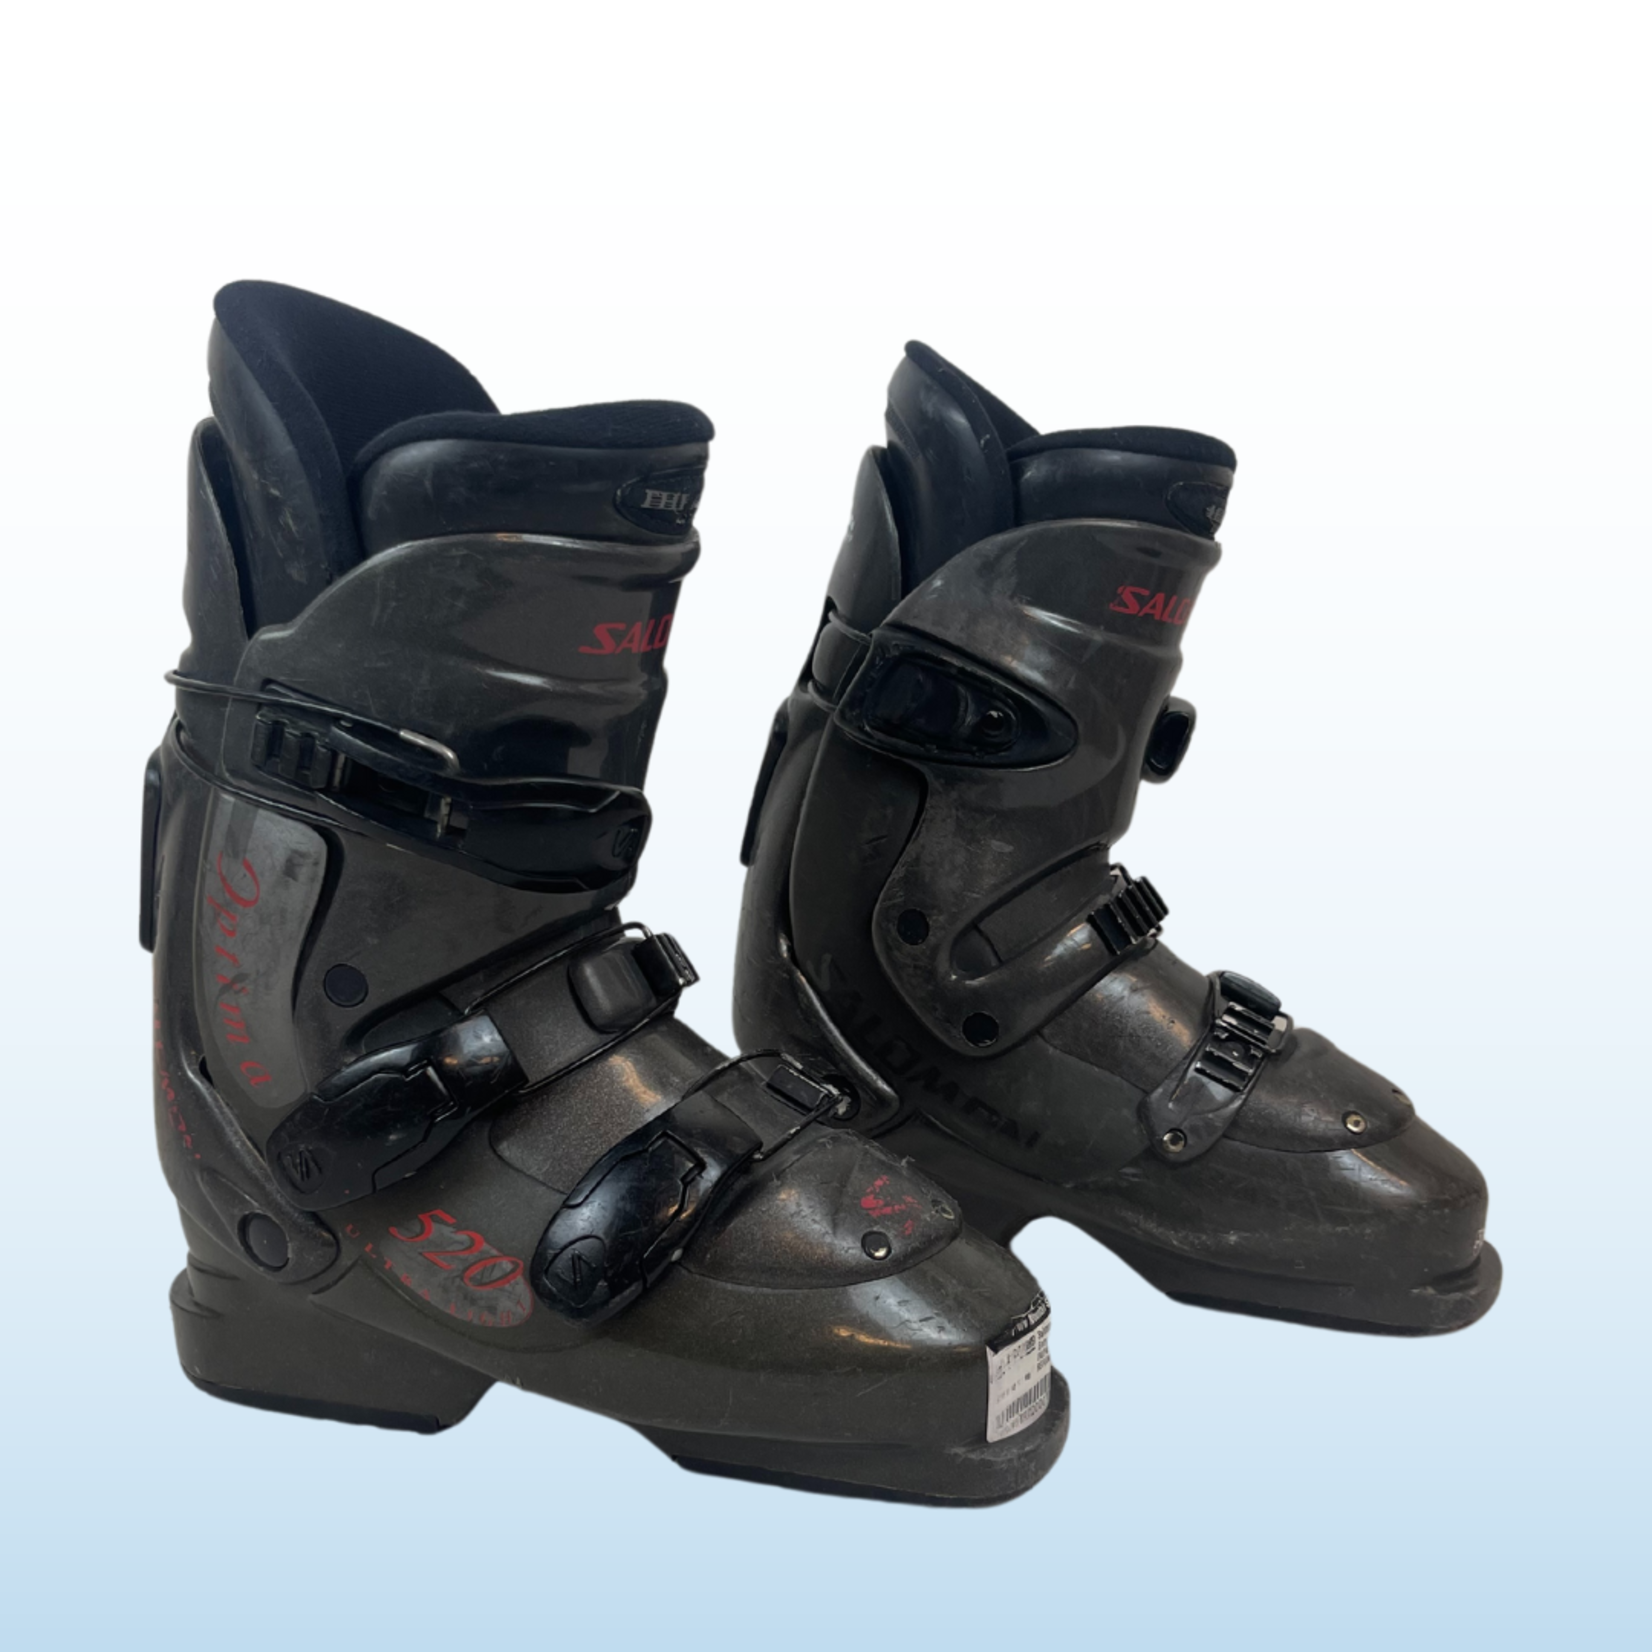 Salomon Salomon Symbio Rear Entry Ski Boots, Size 24/24.5  SOLD AS IS/NO REFUNDS/EXCHANGES